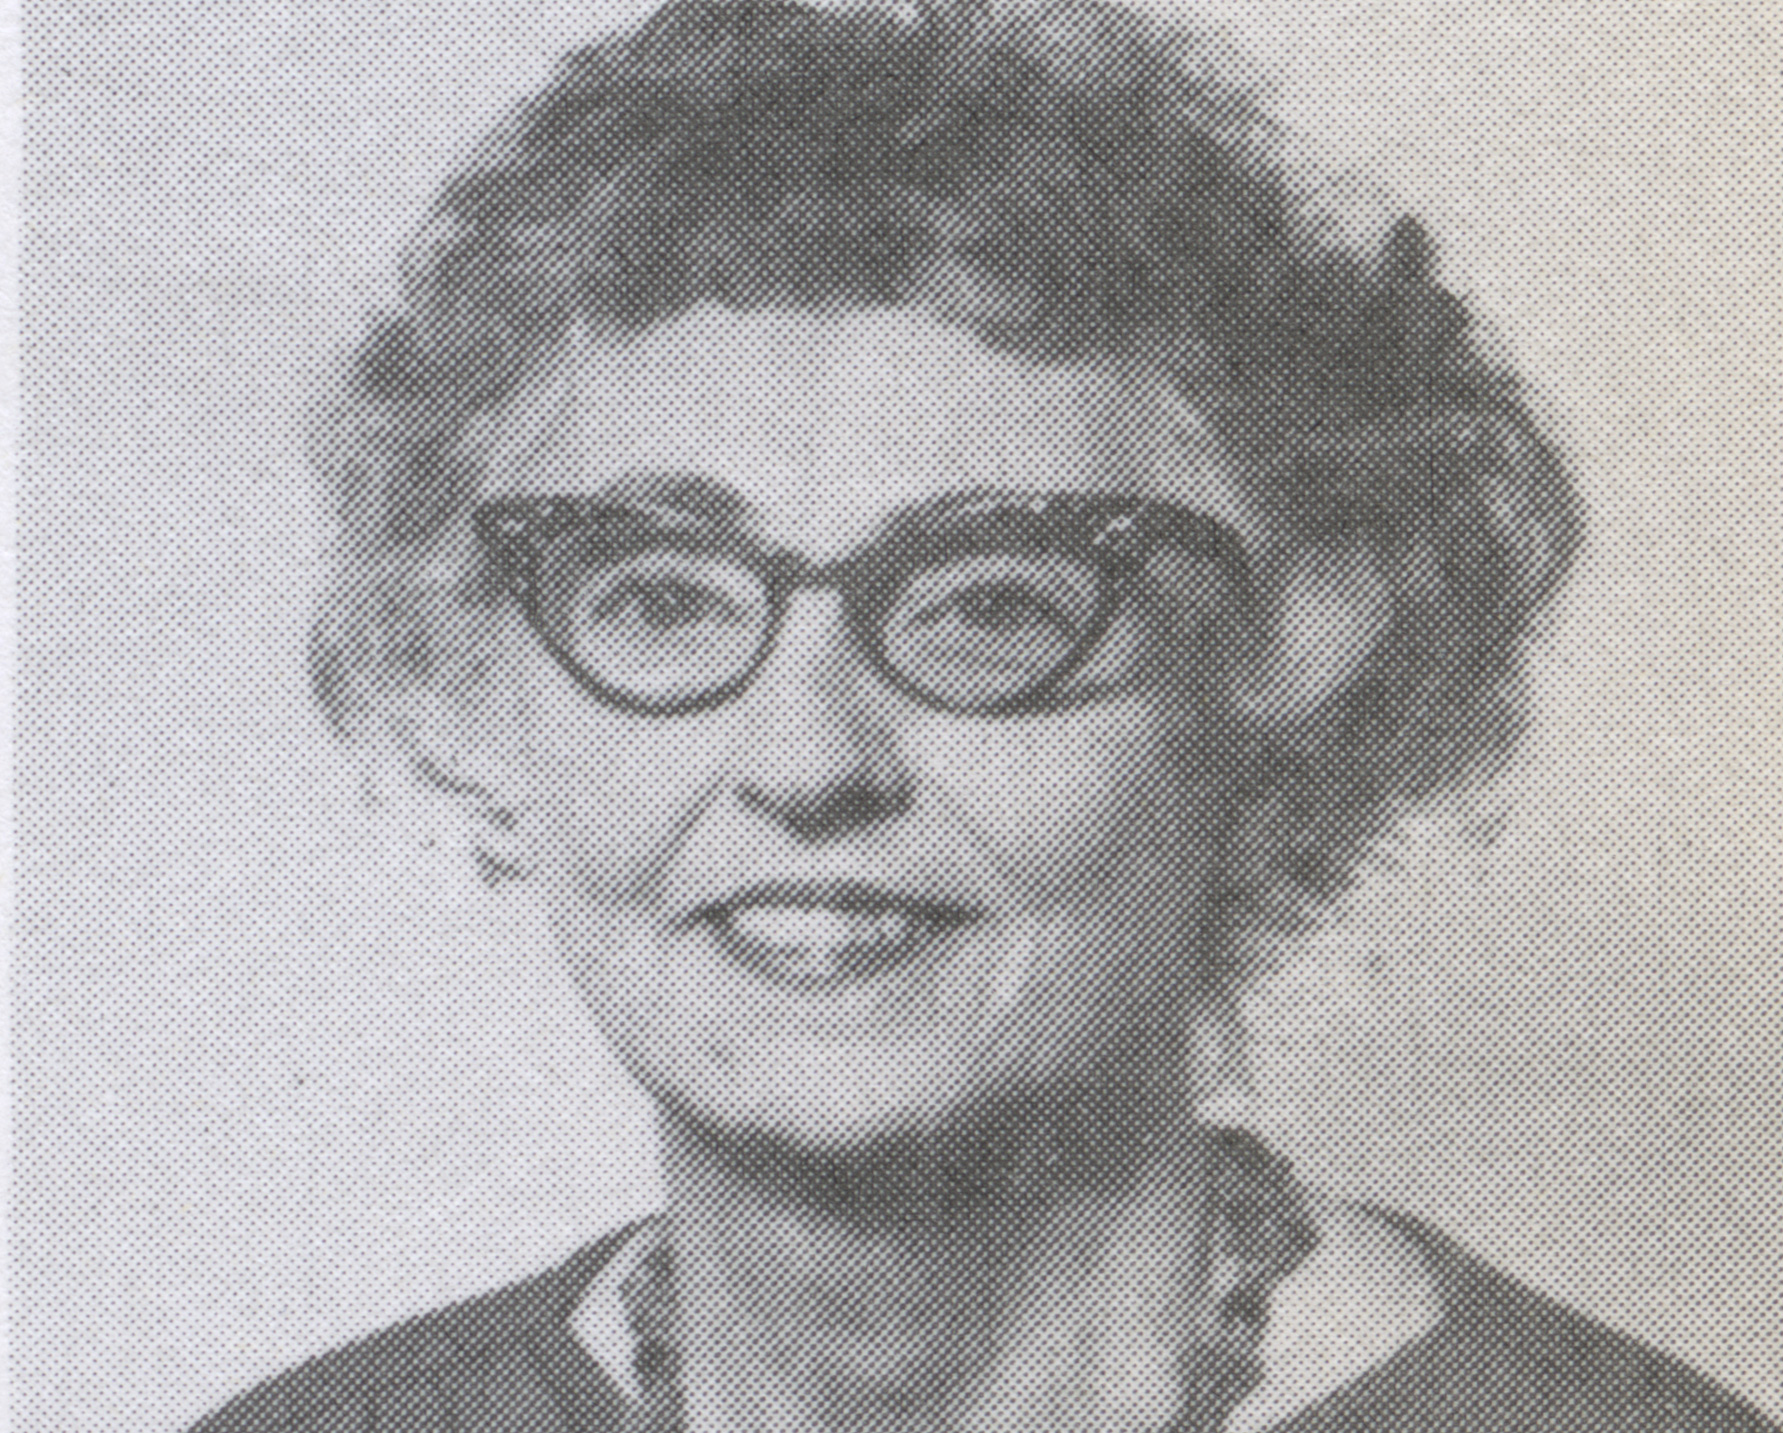 Helen Warner